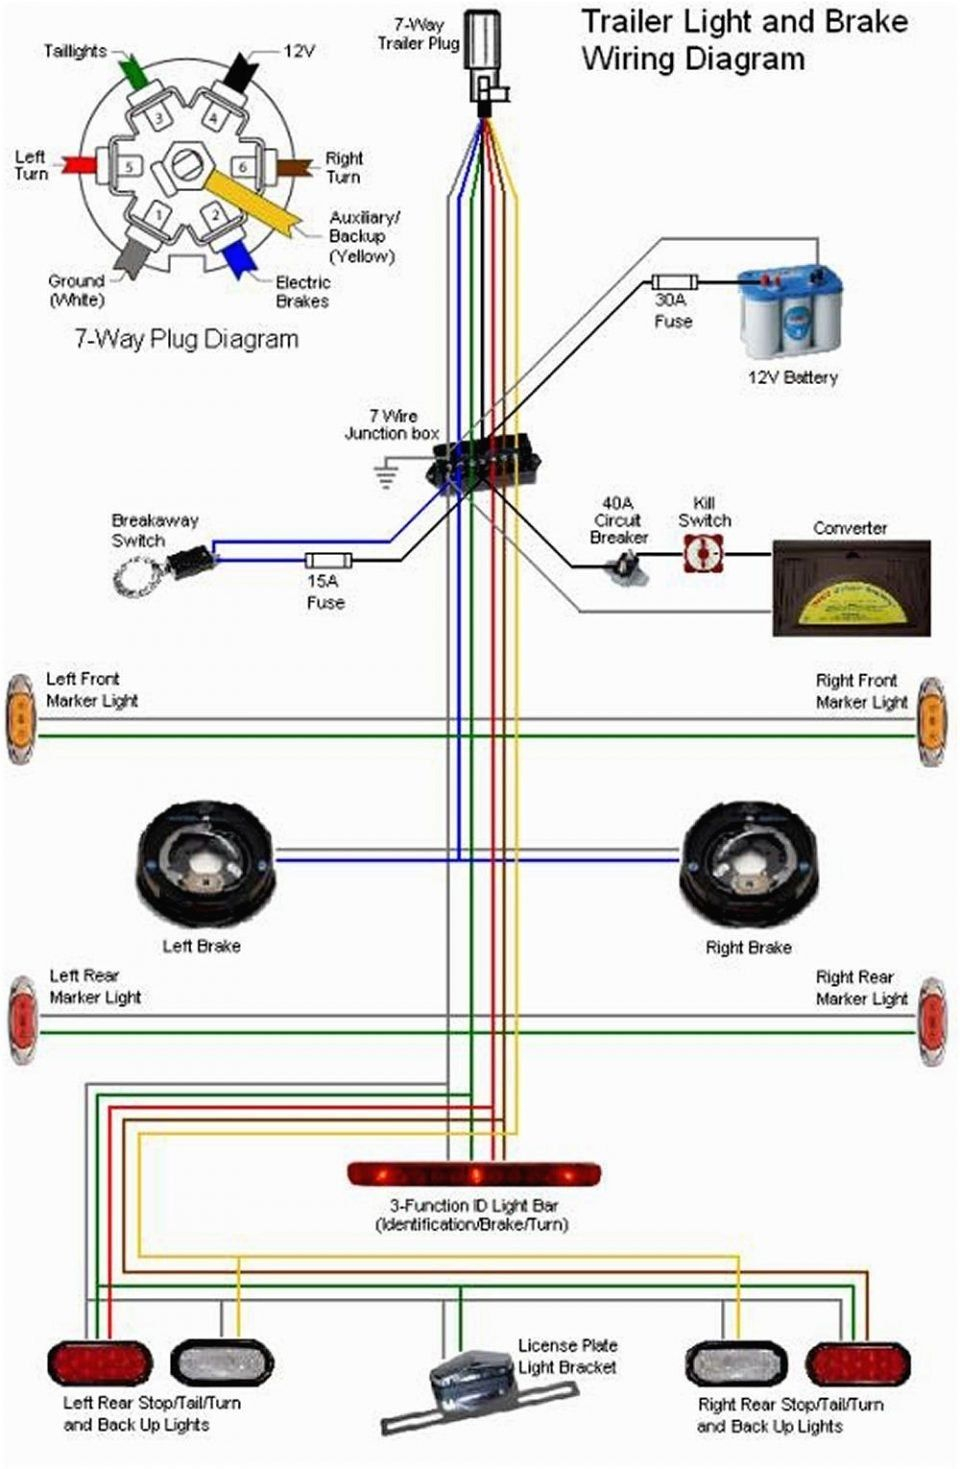 Breakaway Wiring Diagram Trailer Switch 20 5 | Hastalavista - 5 Wire To 4 Wire Trailer Wiring Diagram